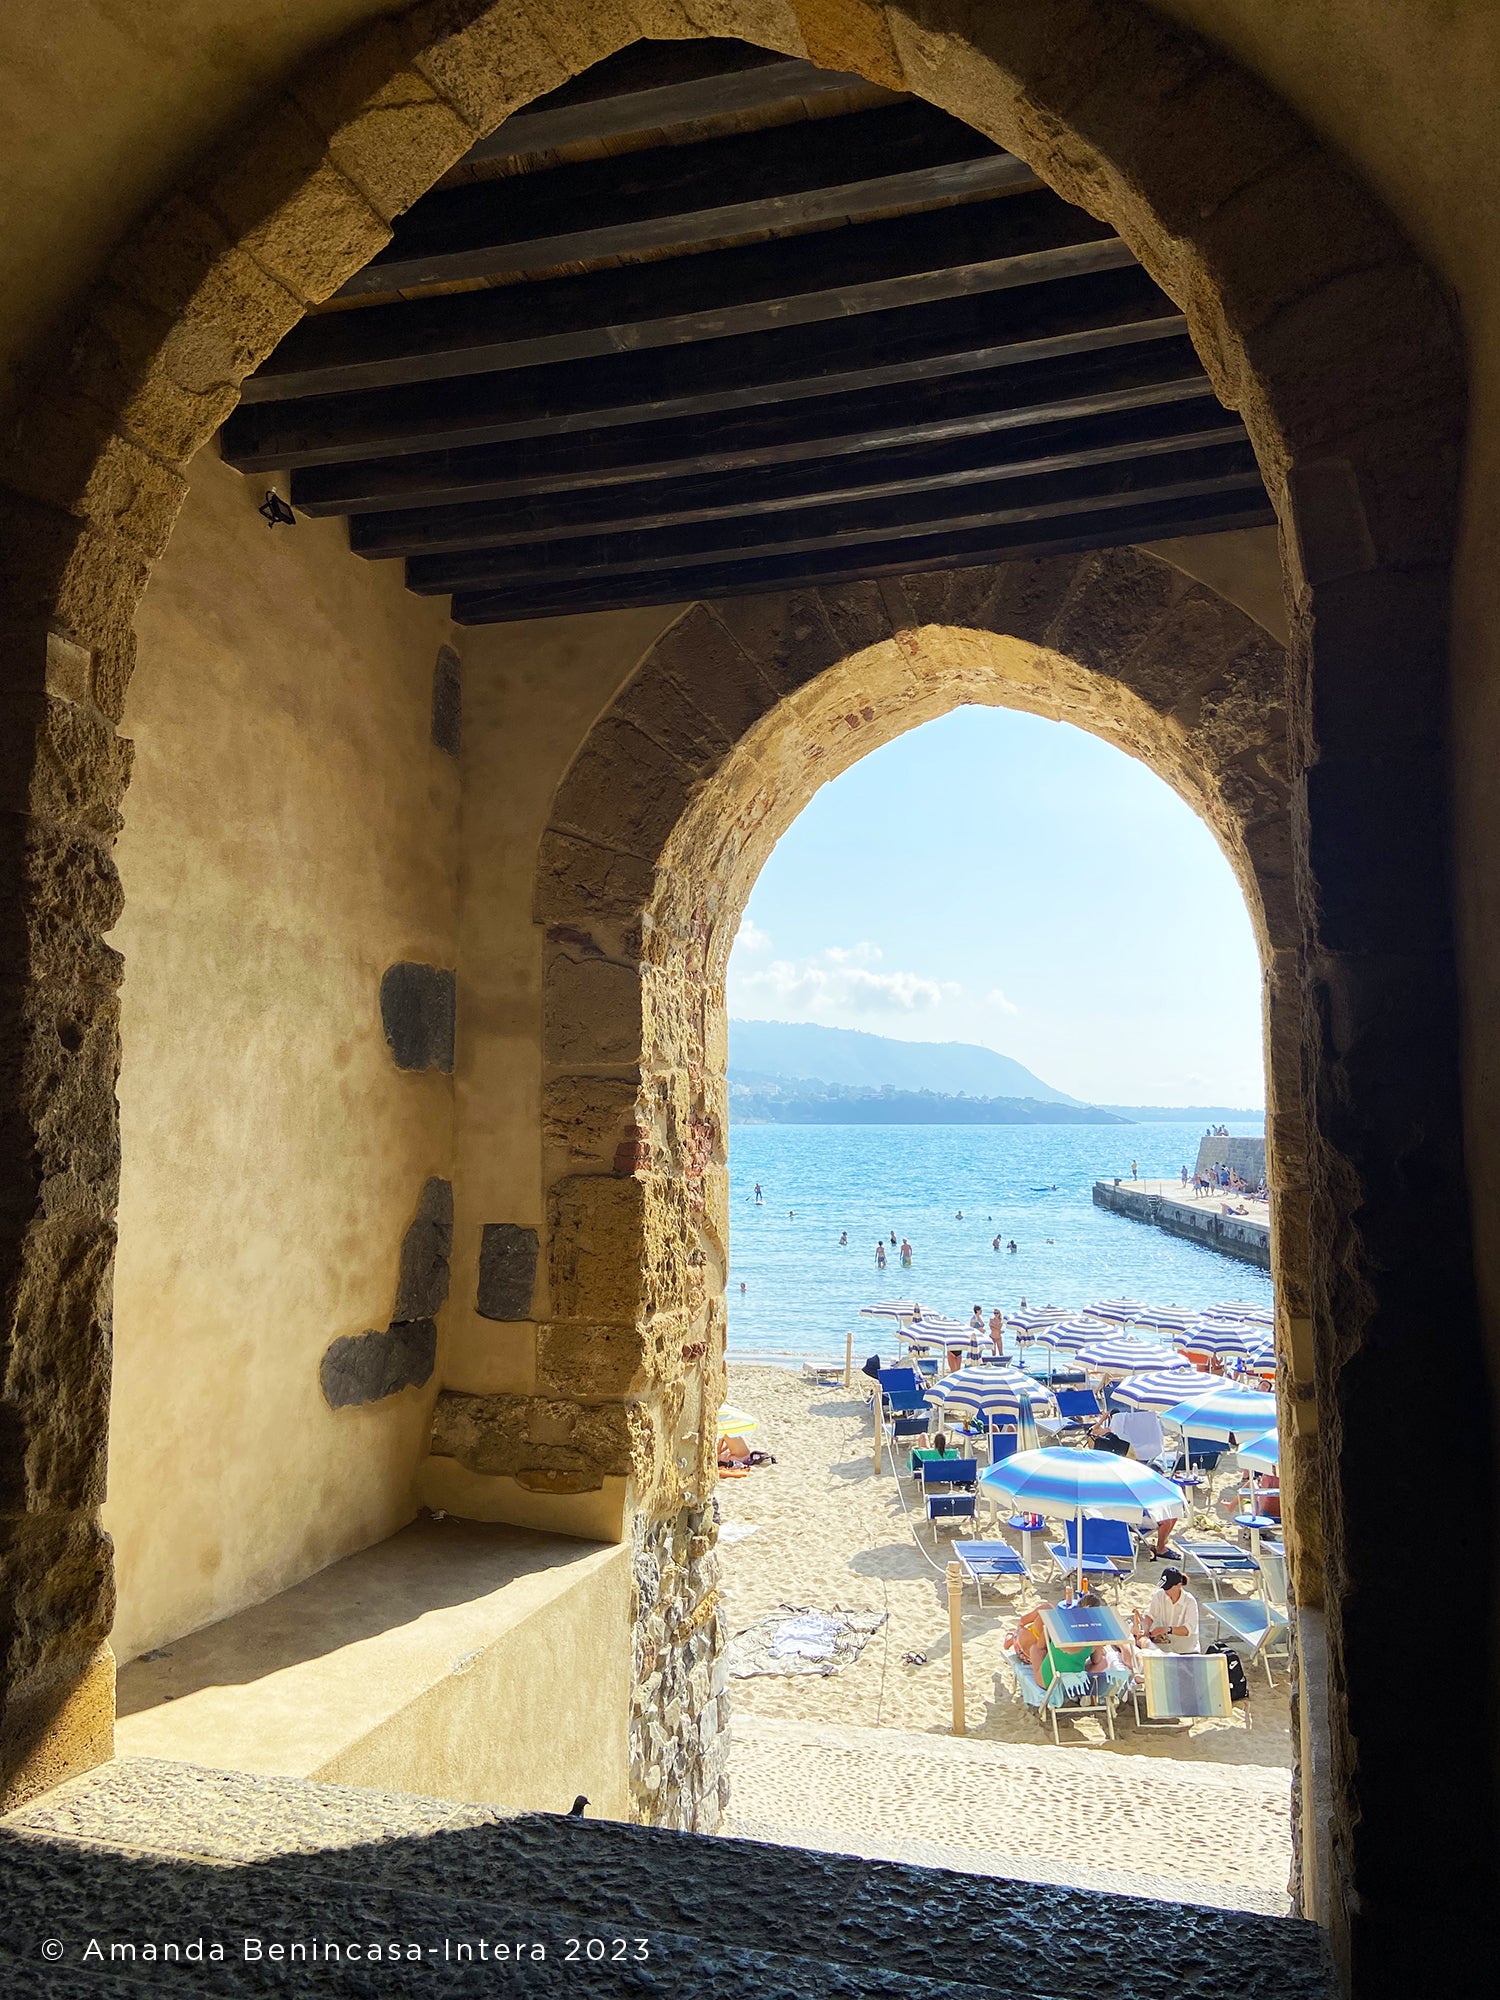 Cefalu, Sicily - © Amanda Benincasa-Intera 2023